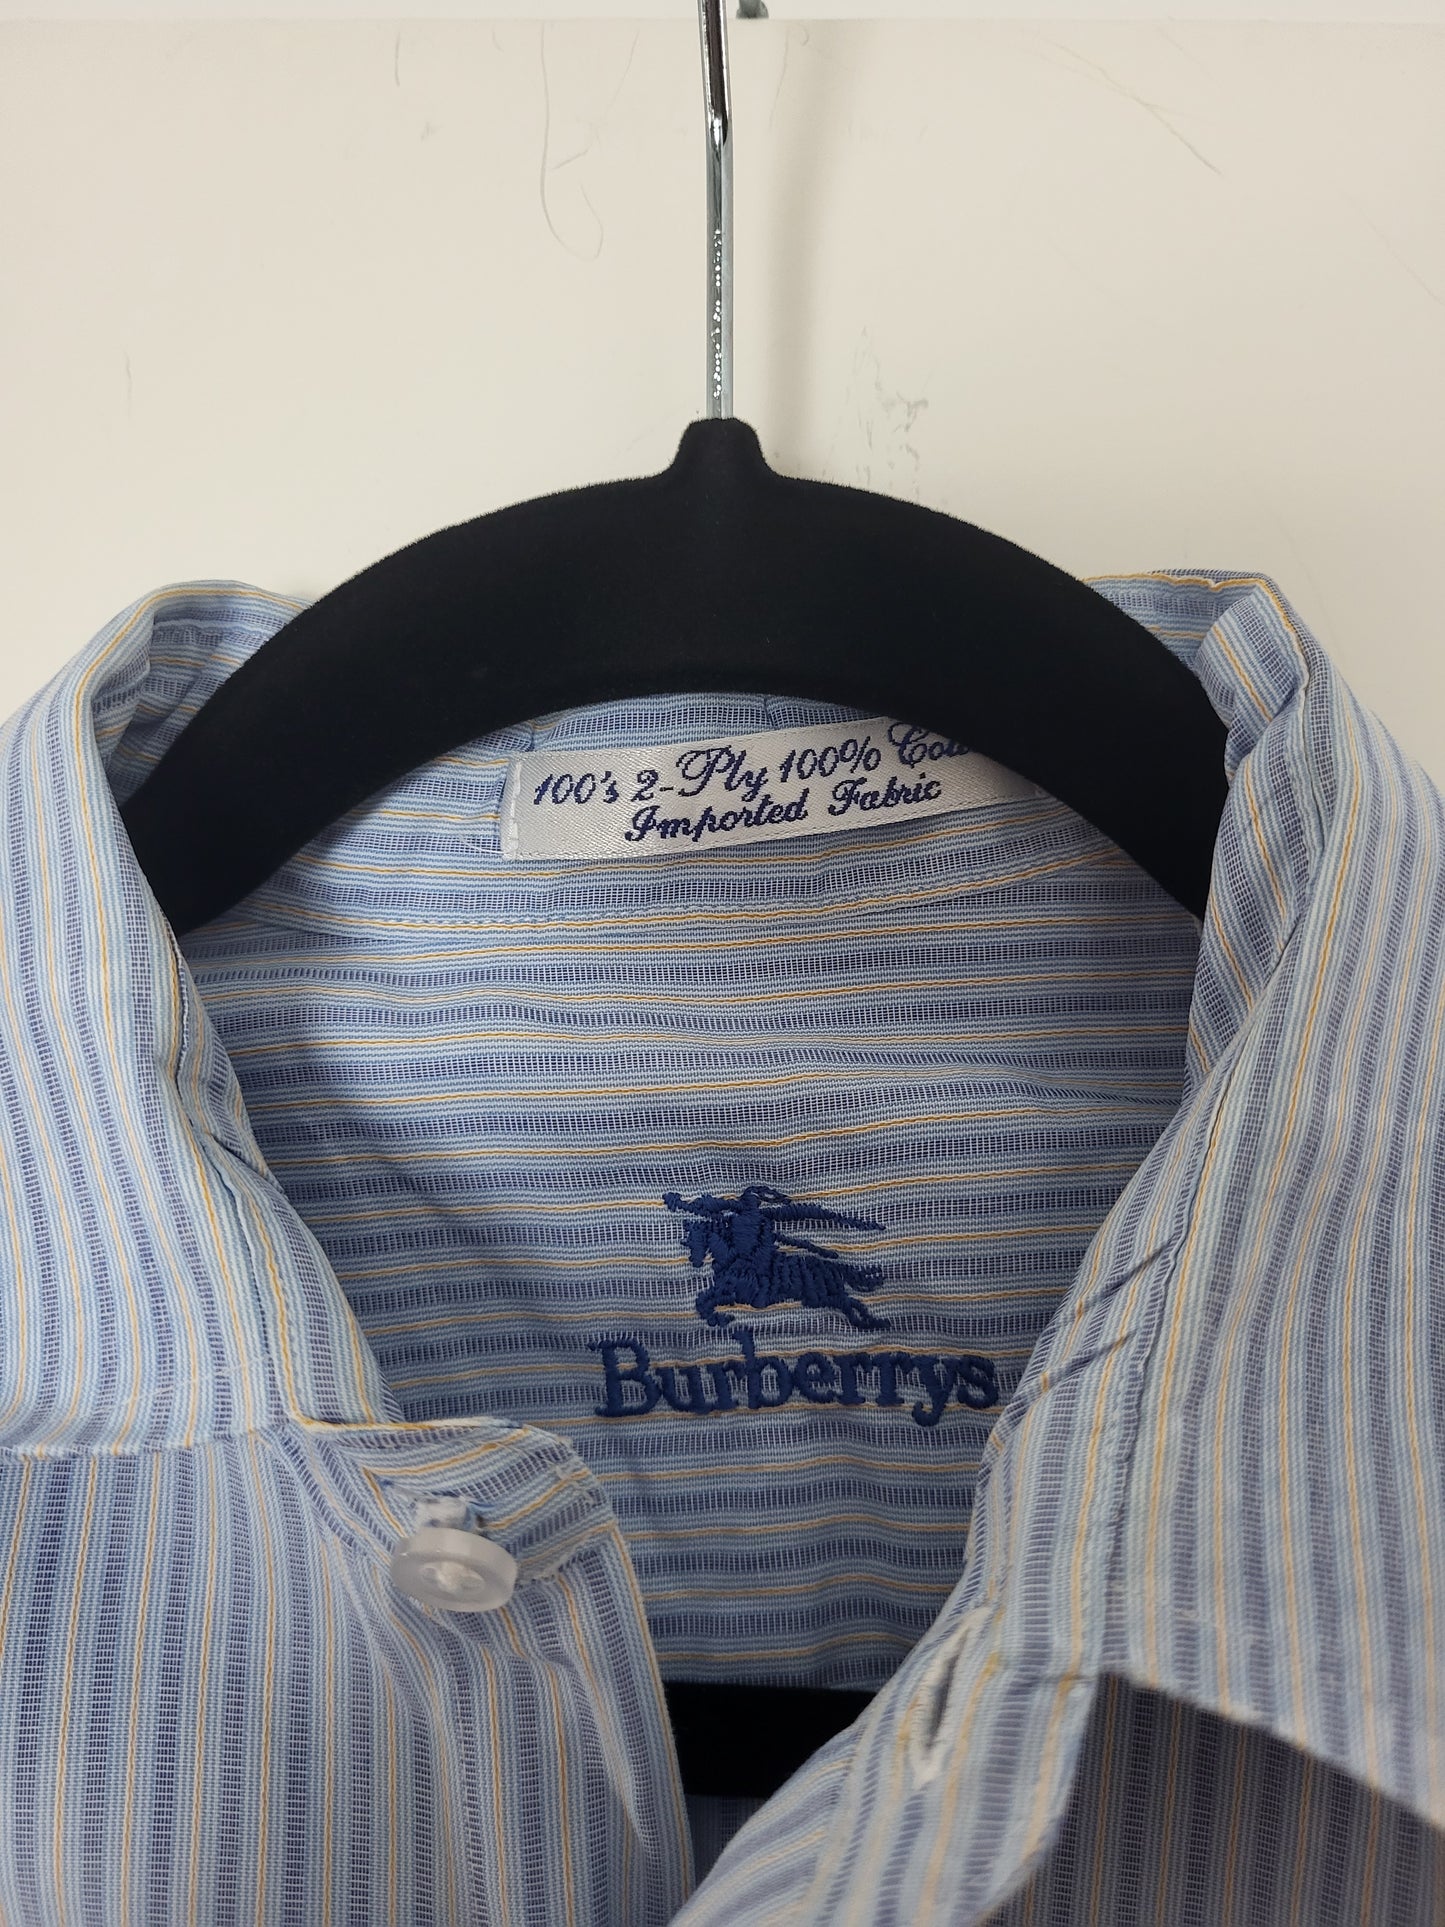 Burberry - Hemd - Streifen Muster - Vintage - Blau - Herren - L